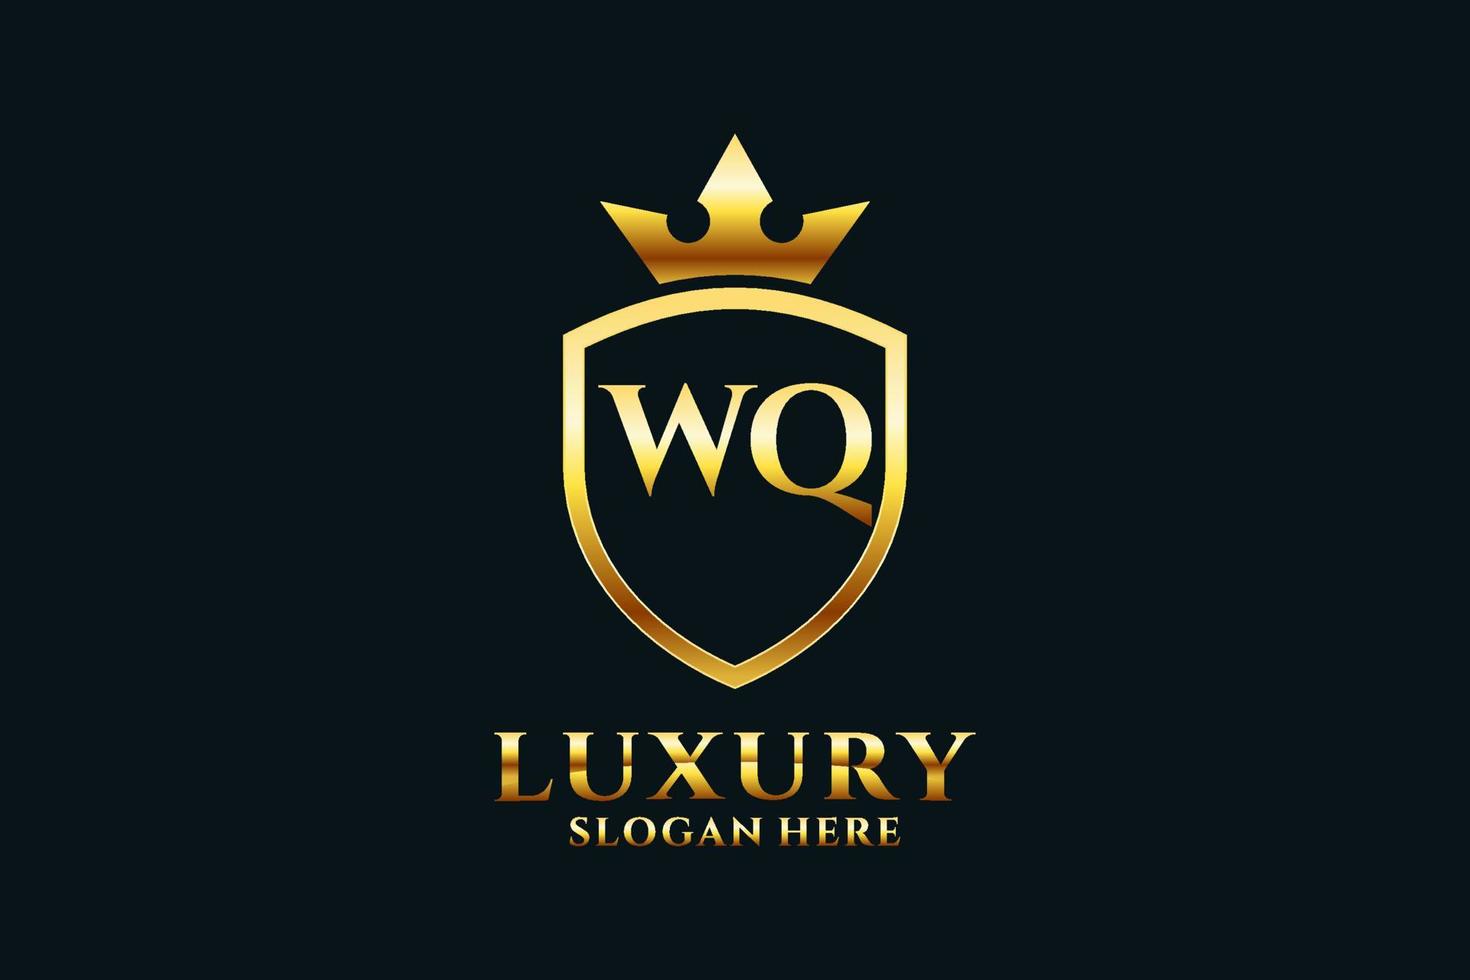 inicial wq elegante logotipo de monograma de luxo ou modelo de crachá com pergaminhos e coroa real - perfeito para projetos de marca luxuosos vetor